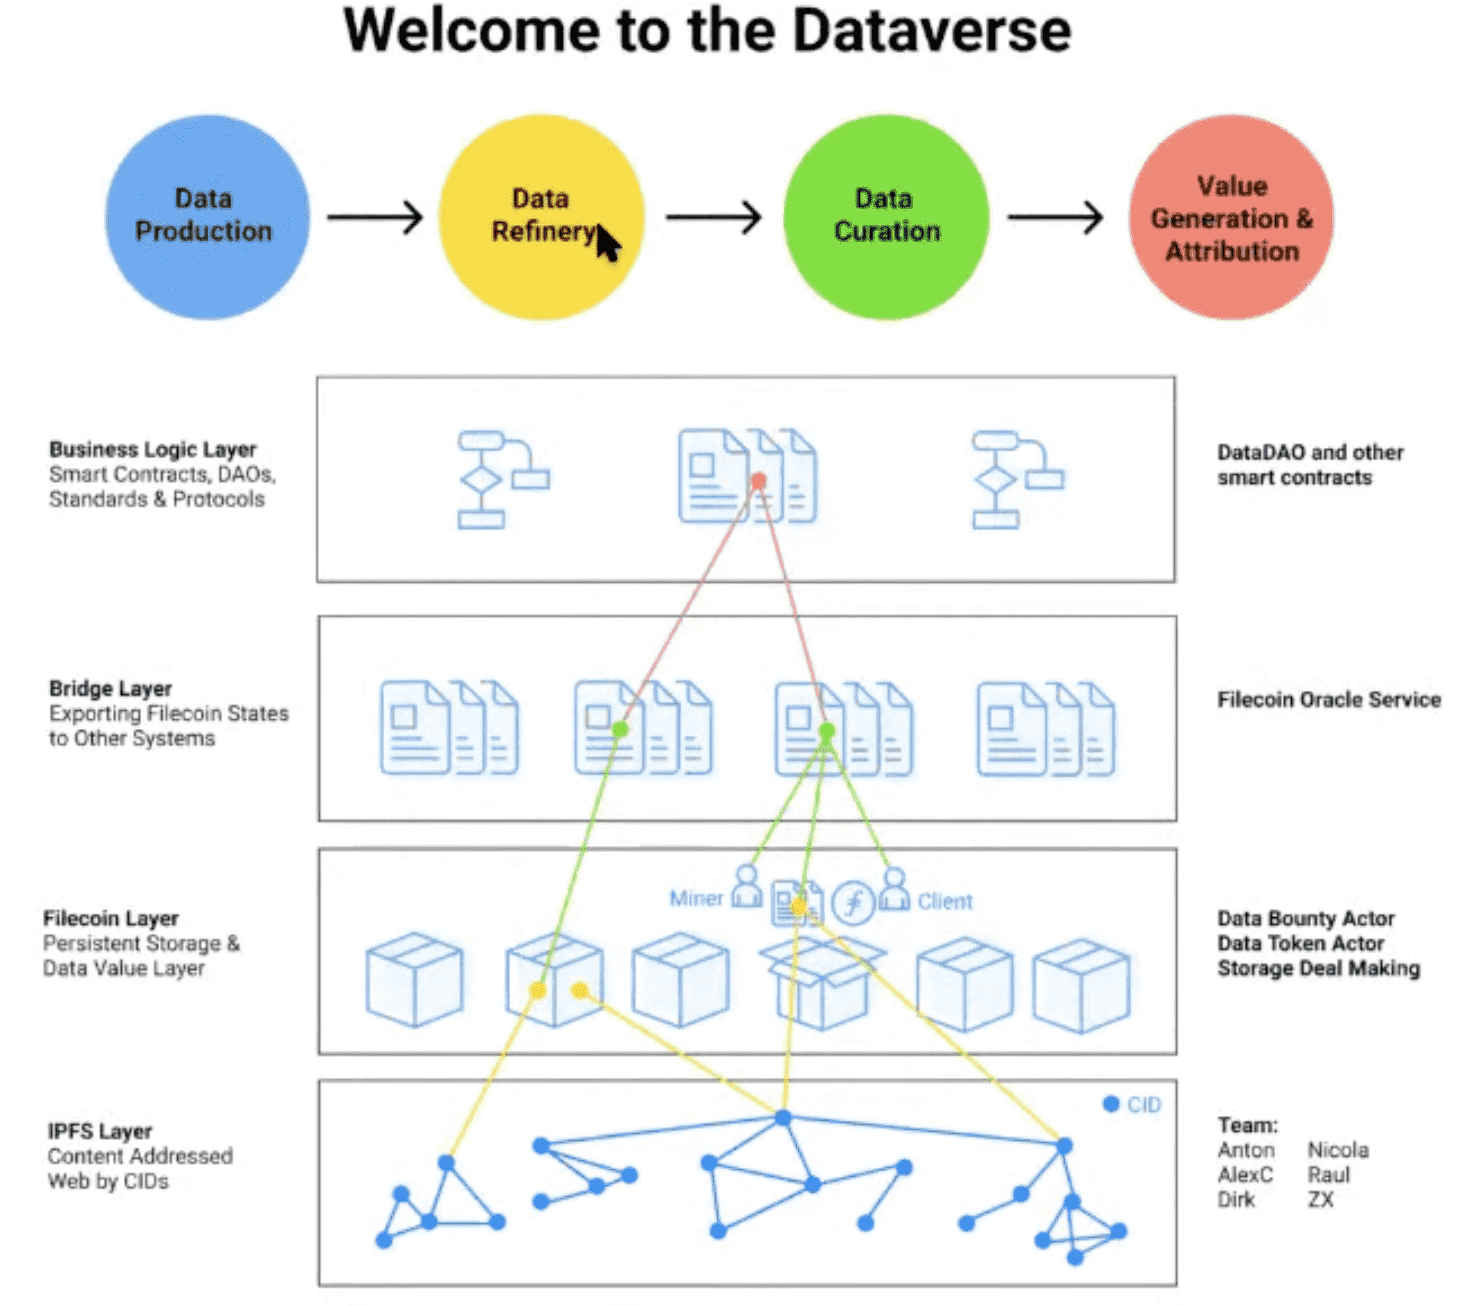 The Dataverse Web3 ecosystem